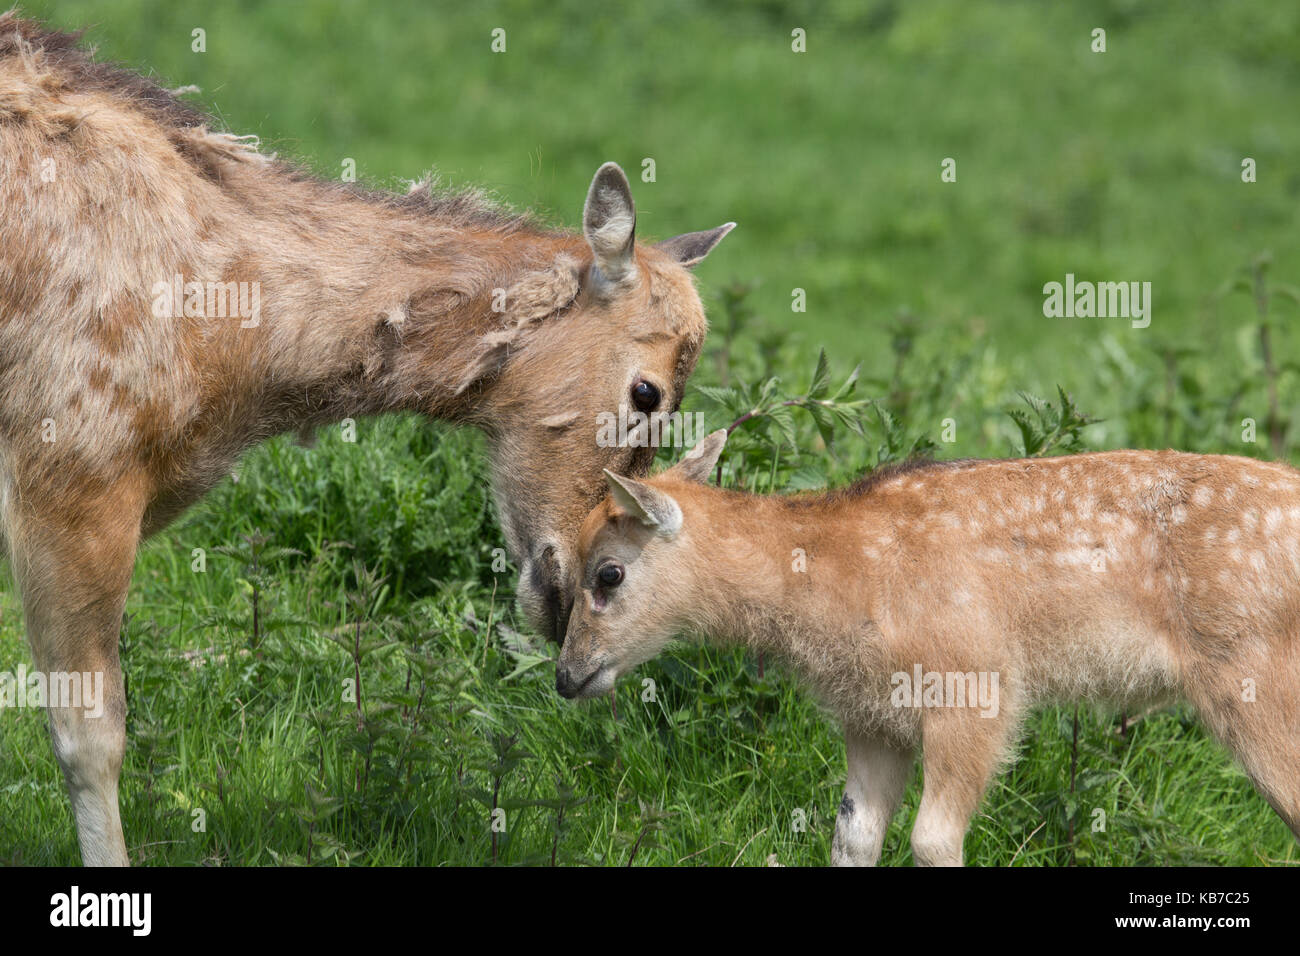 Pere David's Deer (Elaphurus davidianus) mother and calf interacting, The Netherlands, Flevoland, Nature Park Lelystad Stock Photo